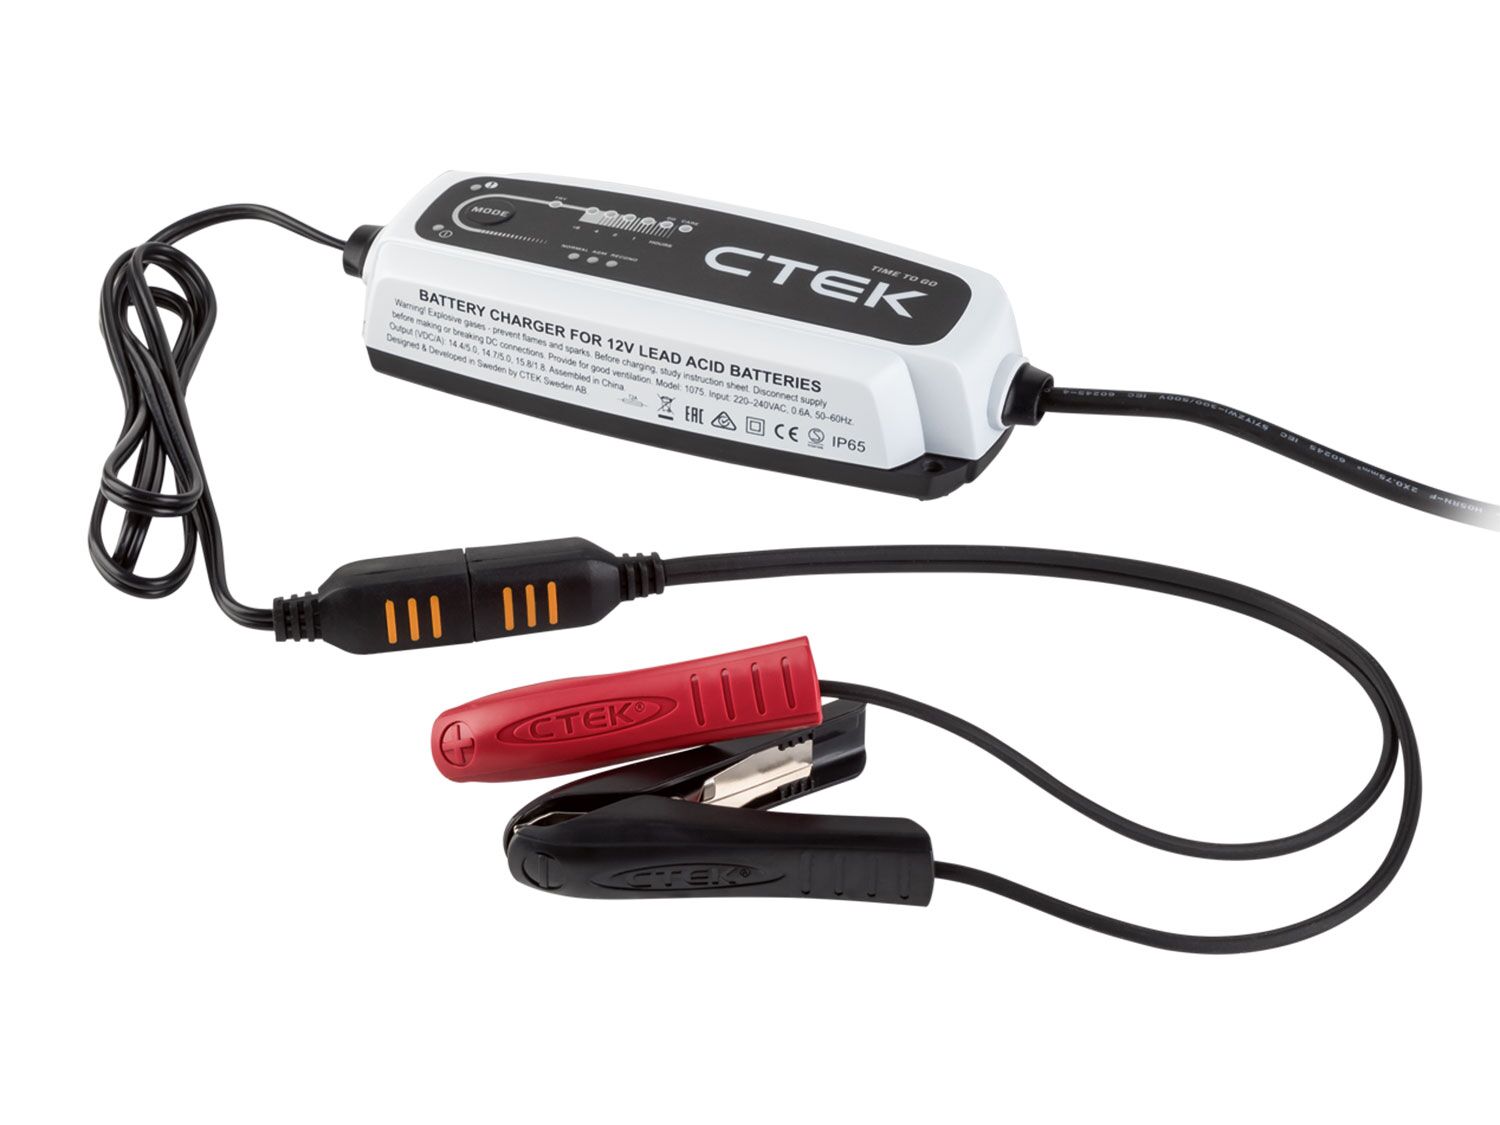 Ctek Cargador de batería para coche lidl